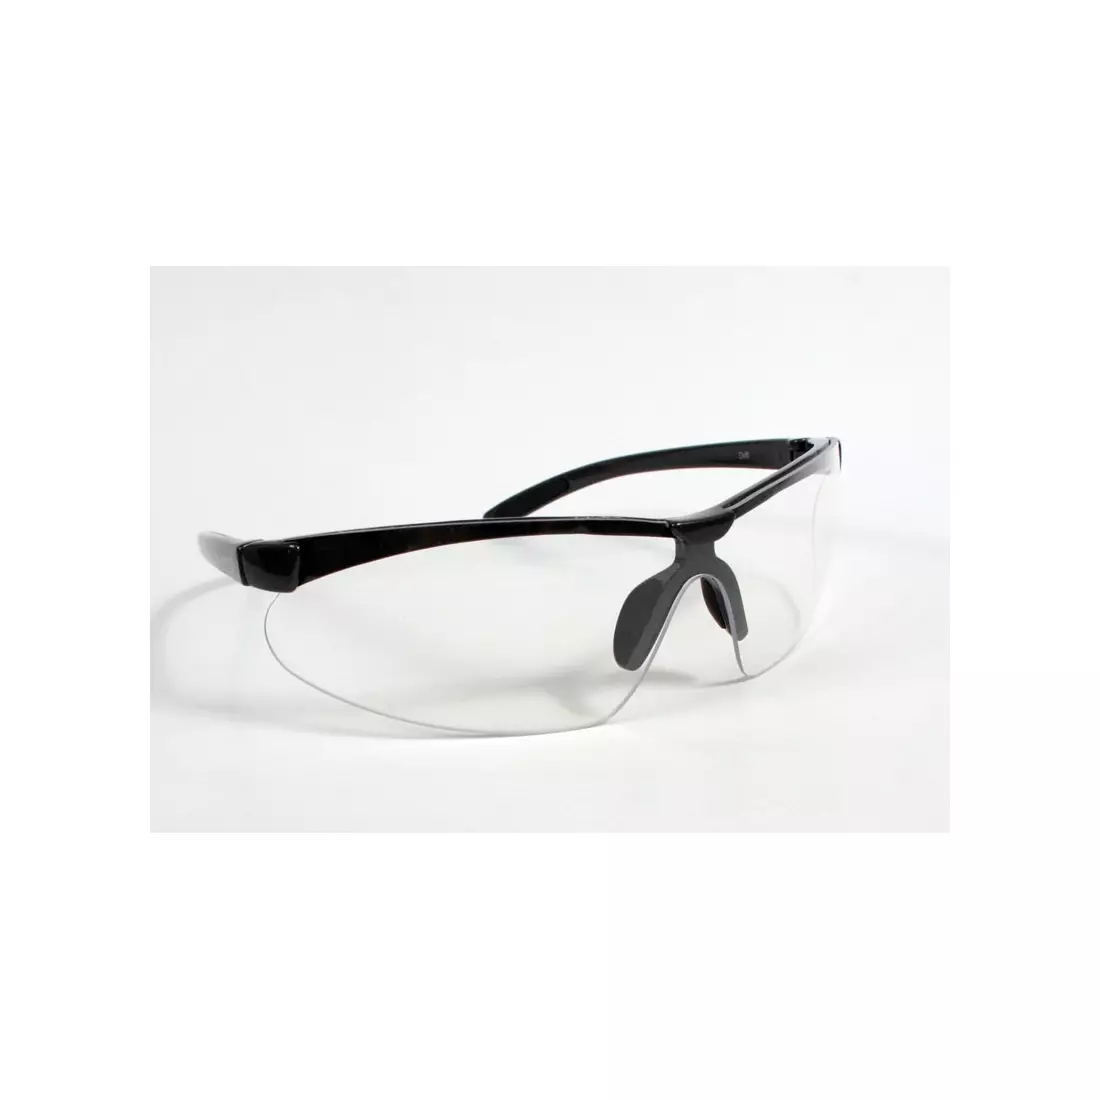 ALPINA DRIFT sports glasses - color: Graphite